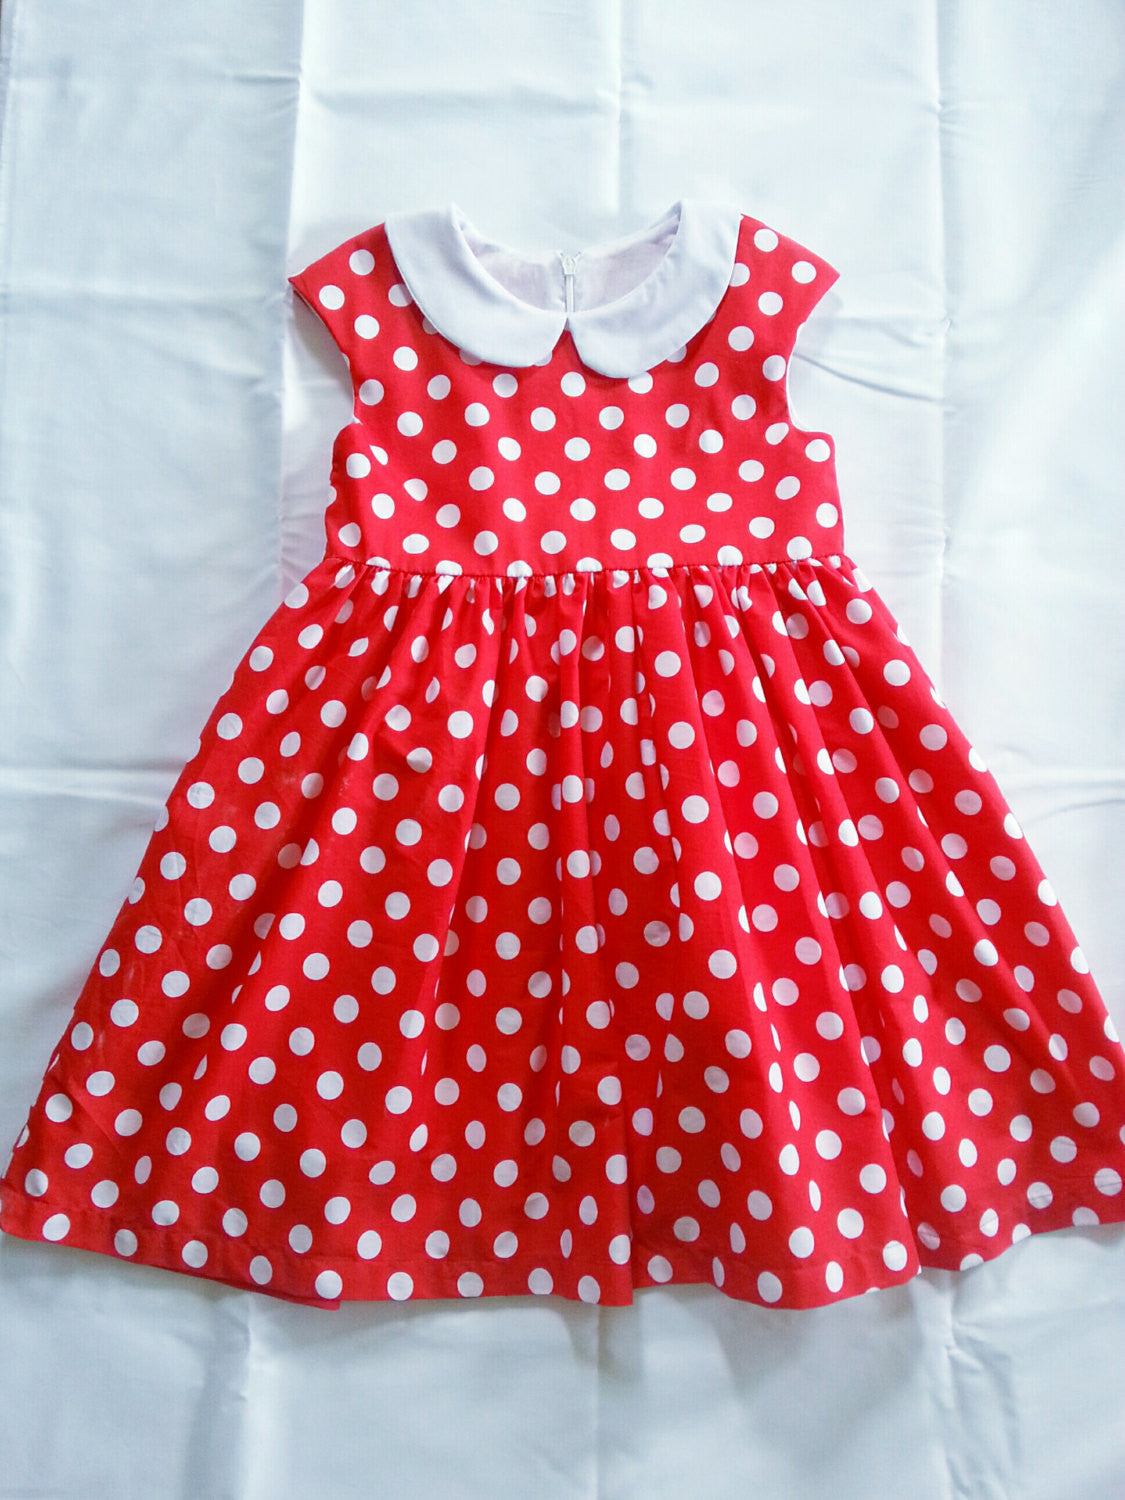 baby girl simple dress